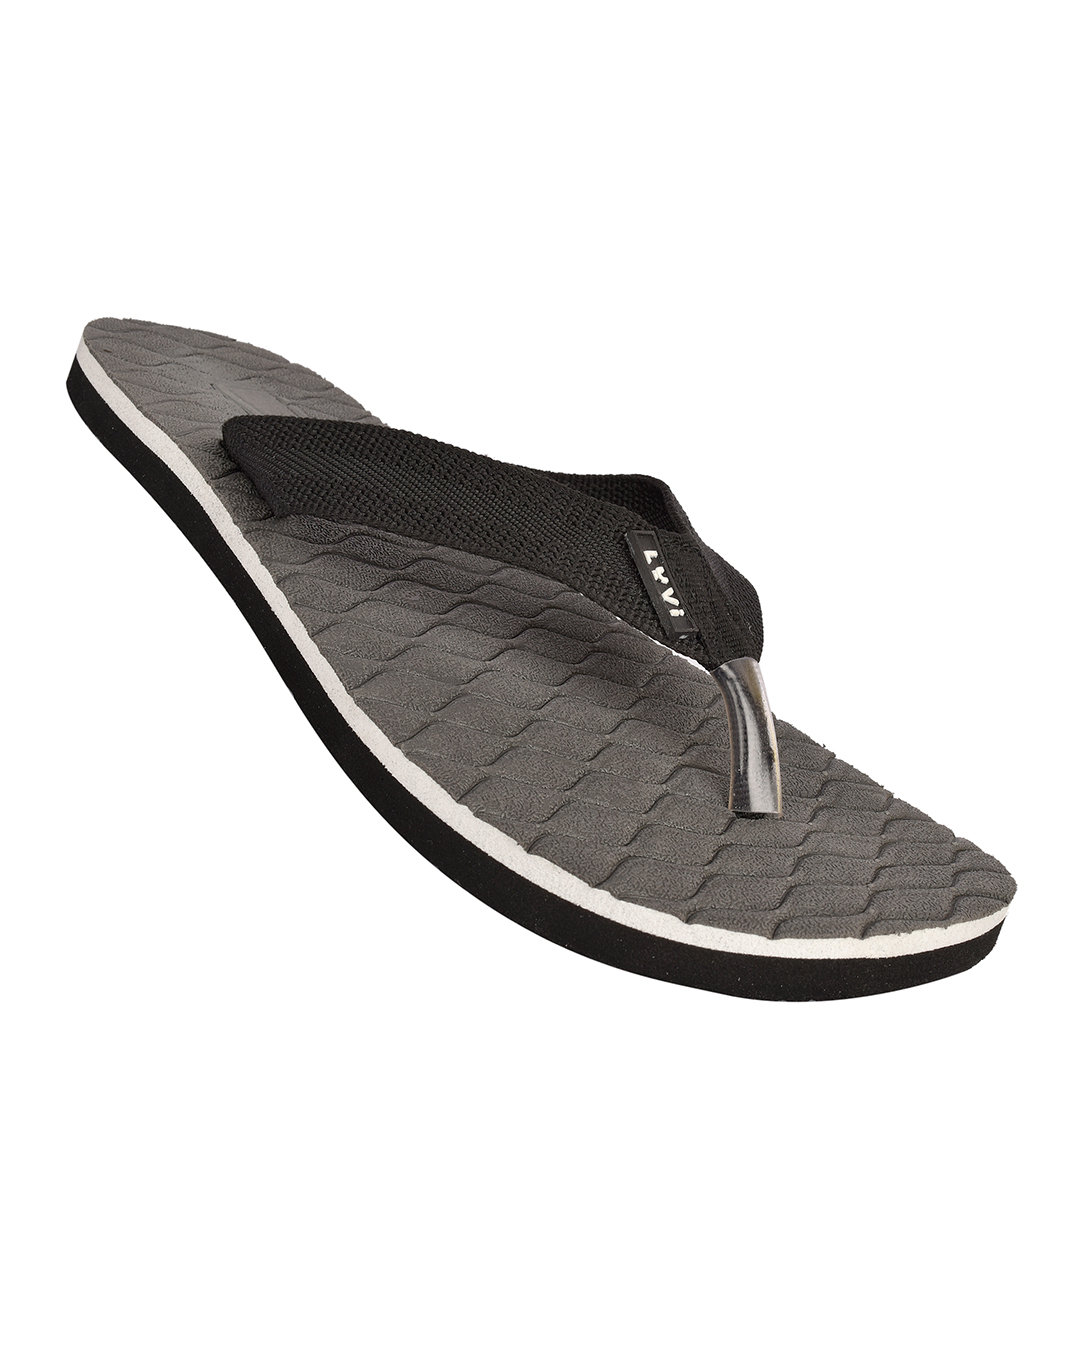 Shop Klassich Grey Color Casual Flip Flop's For Men-Back